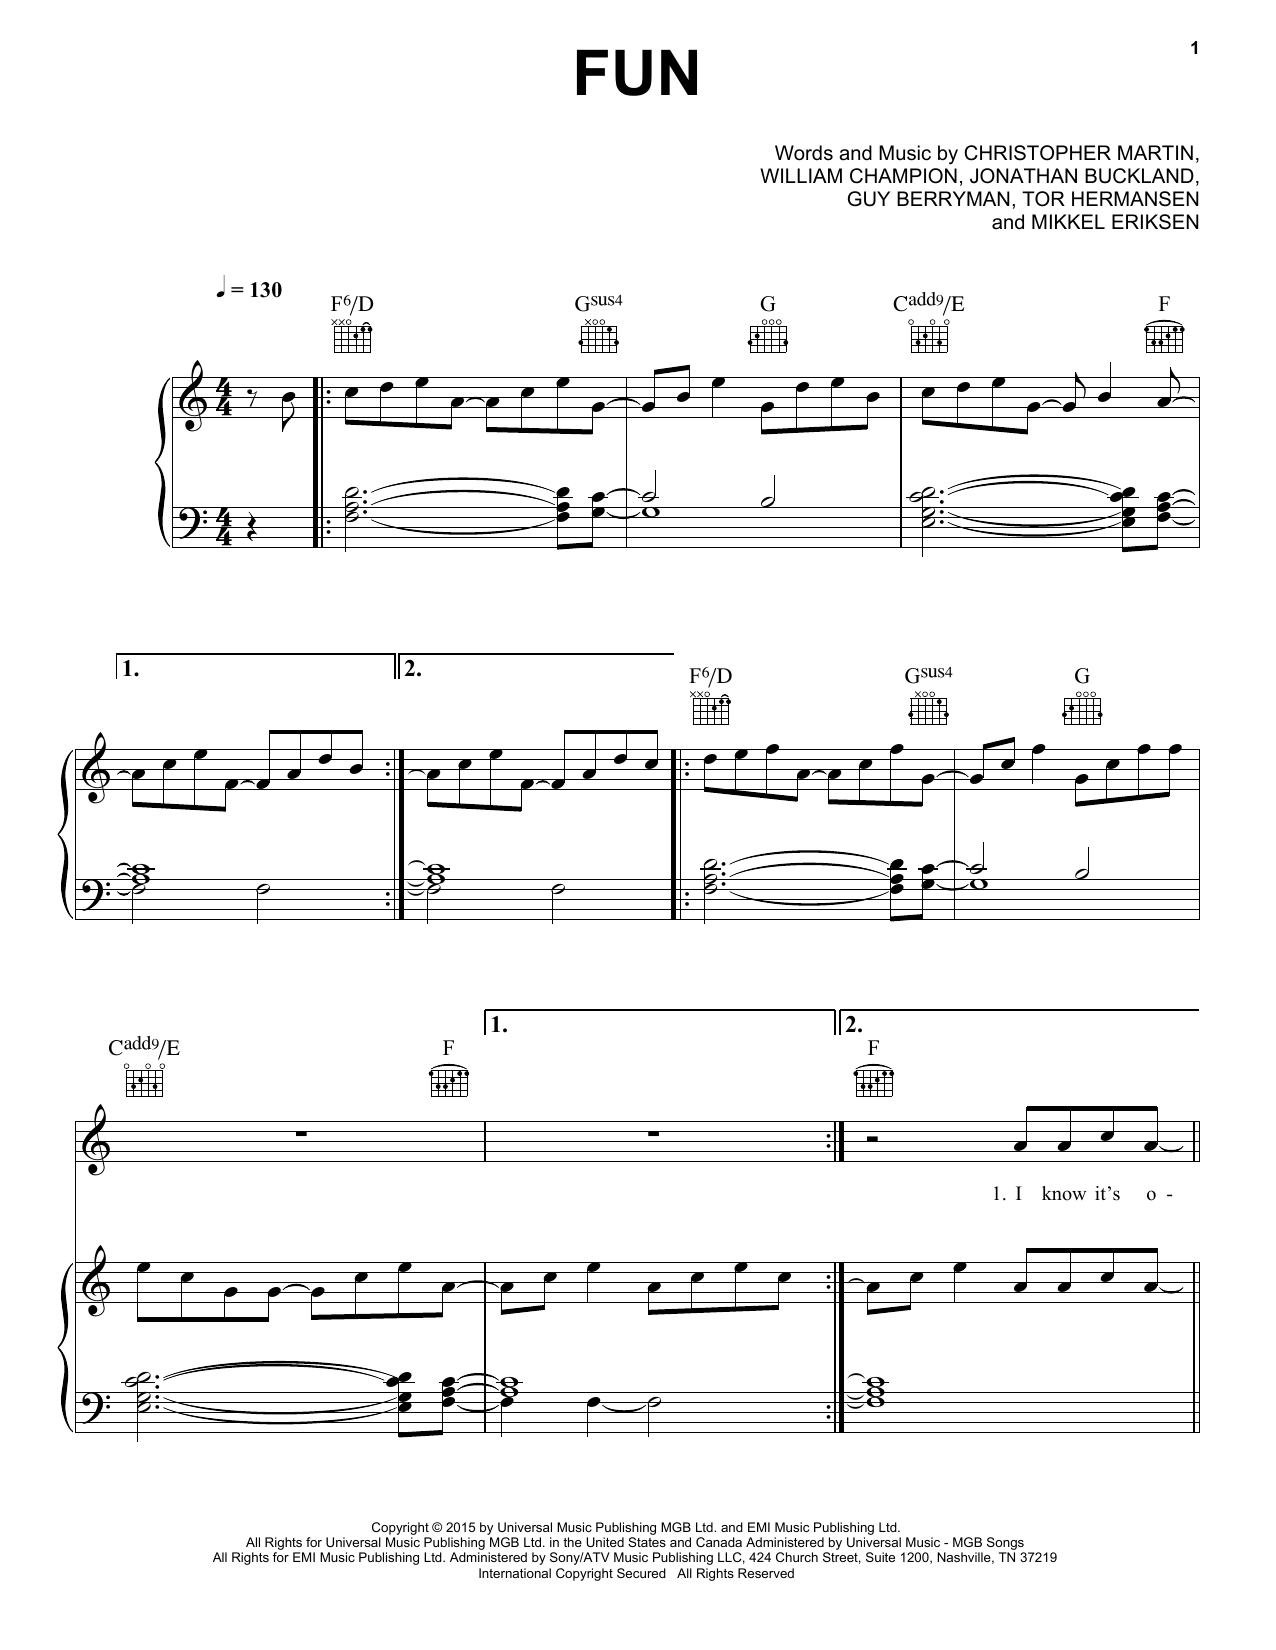 Coldplay "Fun" Sheet Music Notes, Chords | Piano, Vocal & Guitar (Right